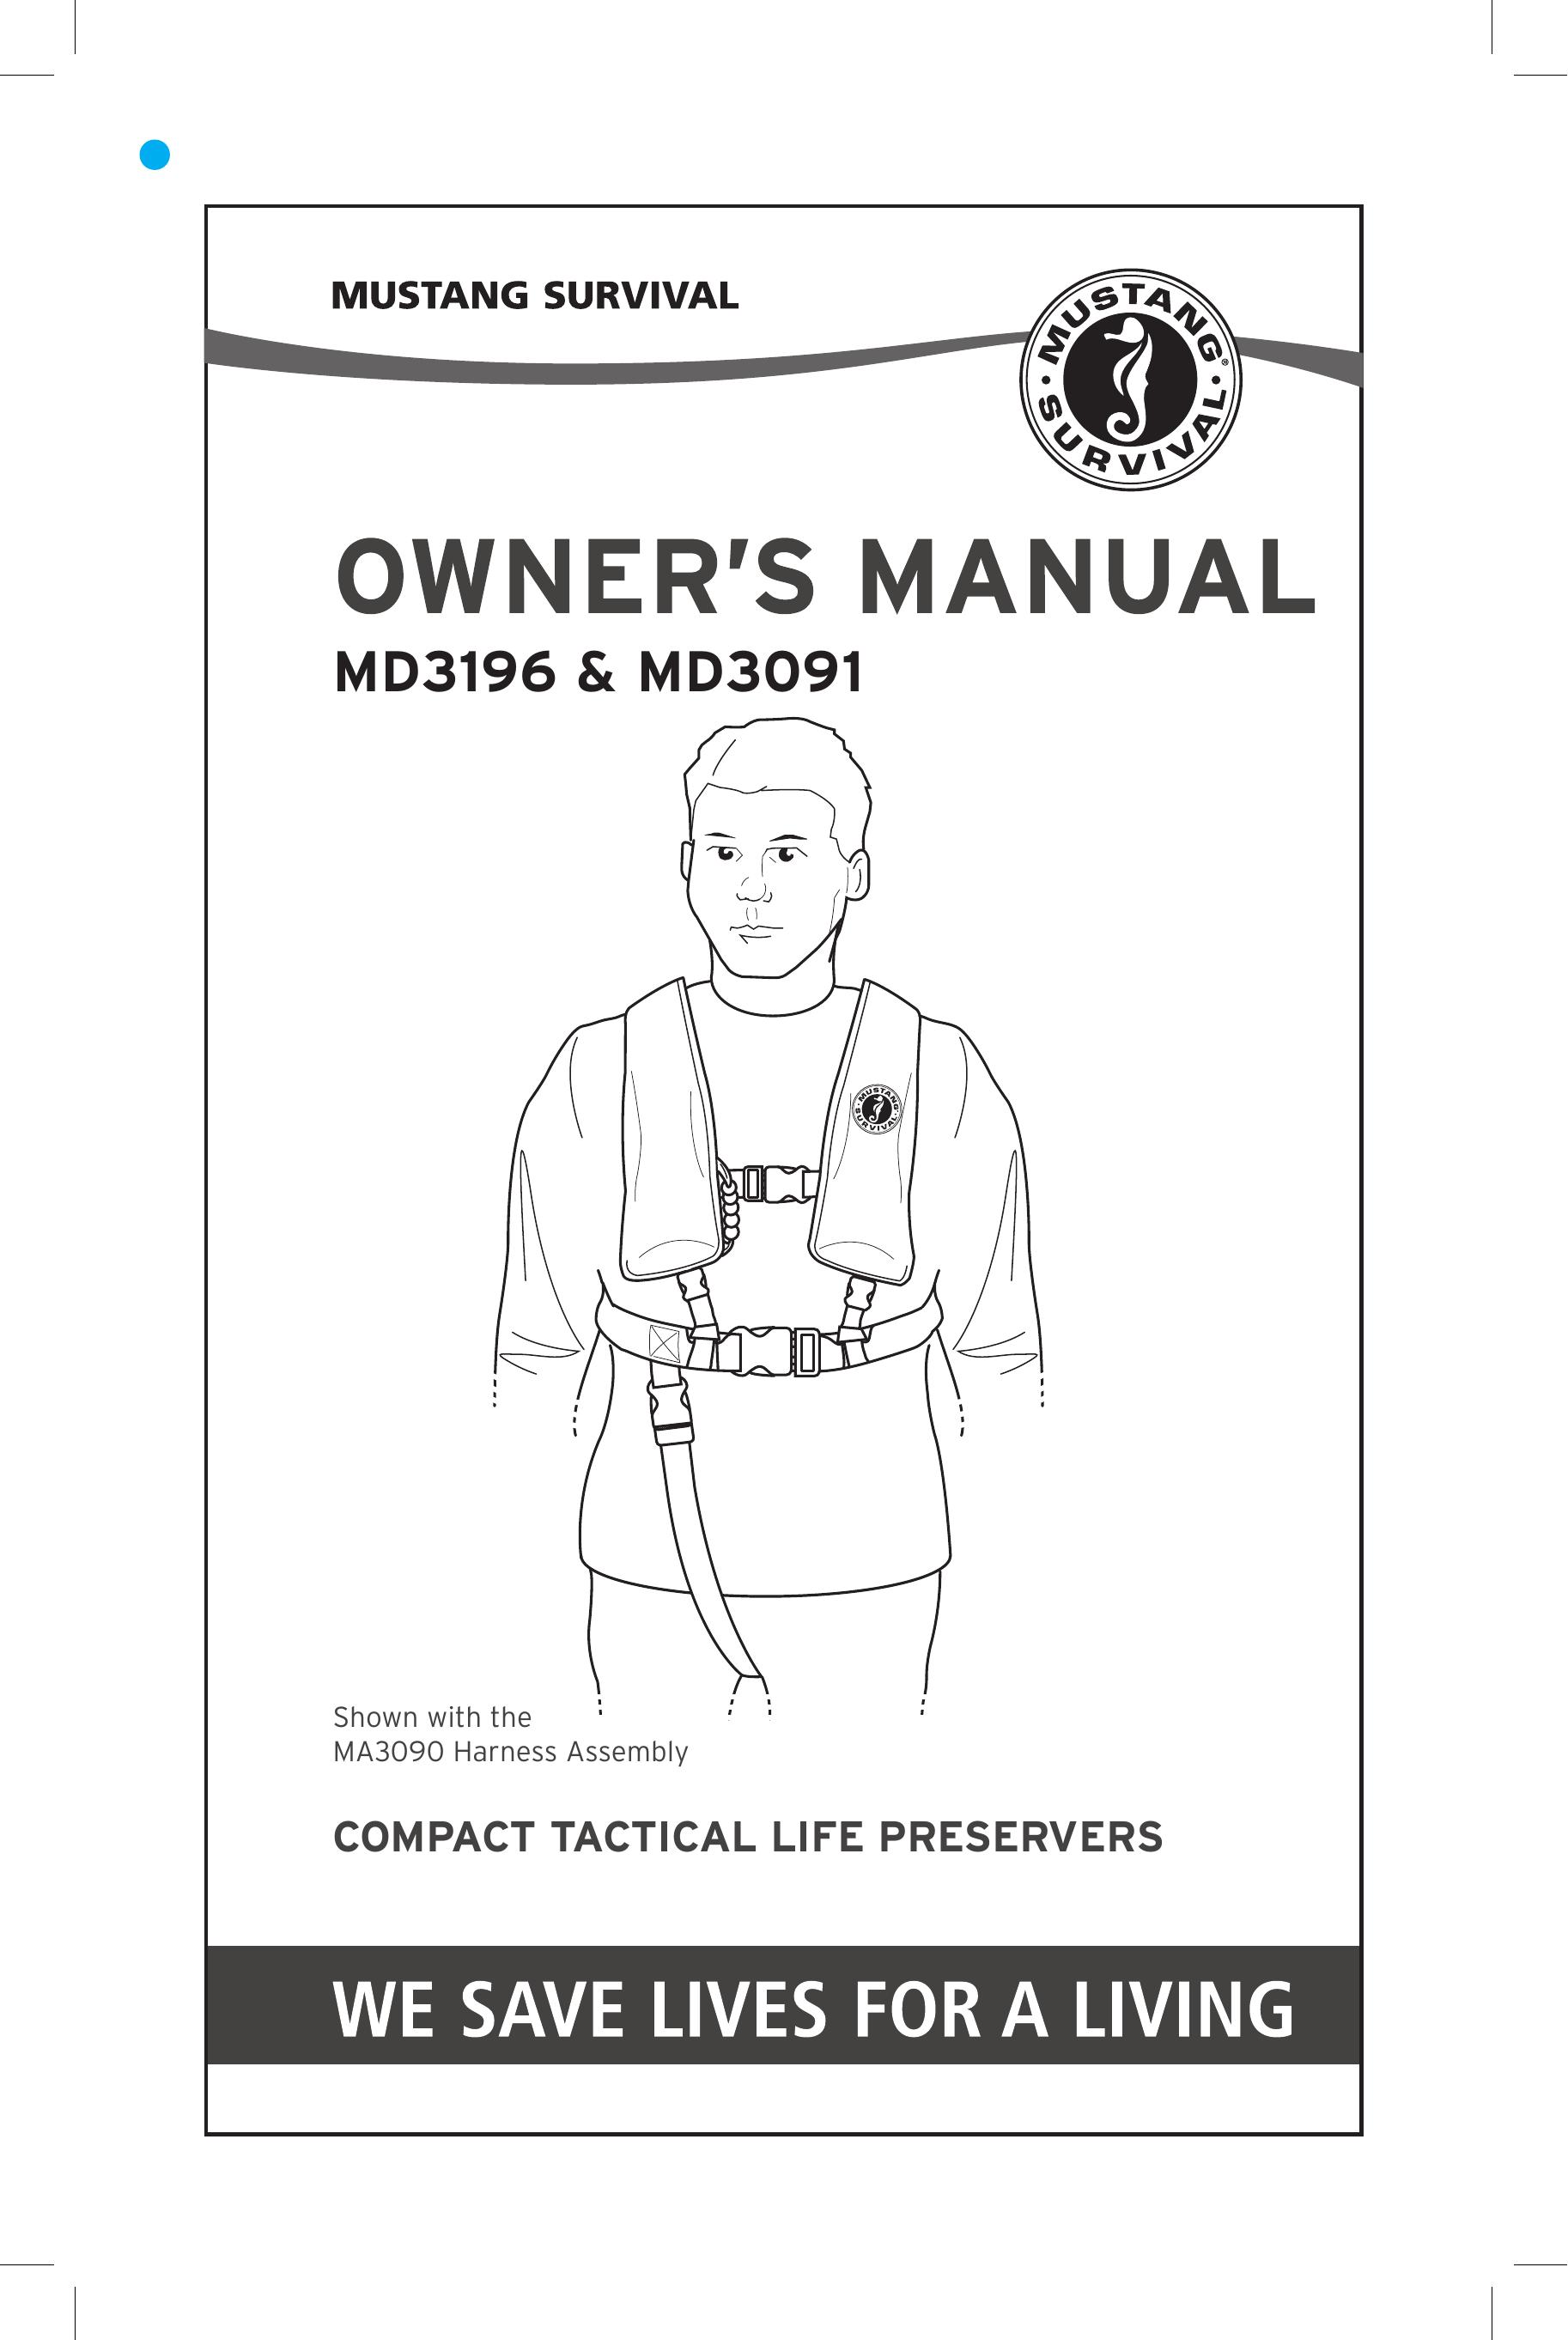 Mustang Survival MD3091 Life Jacket User Manual